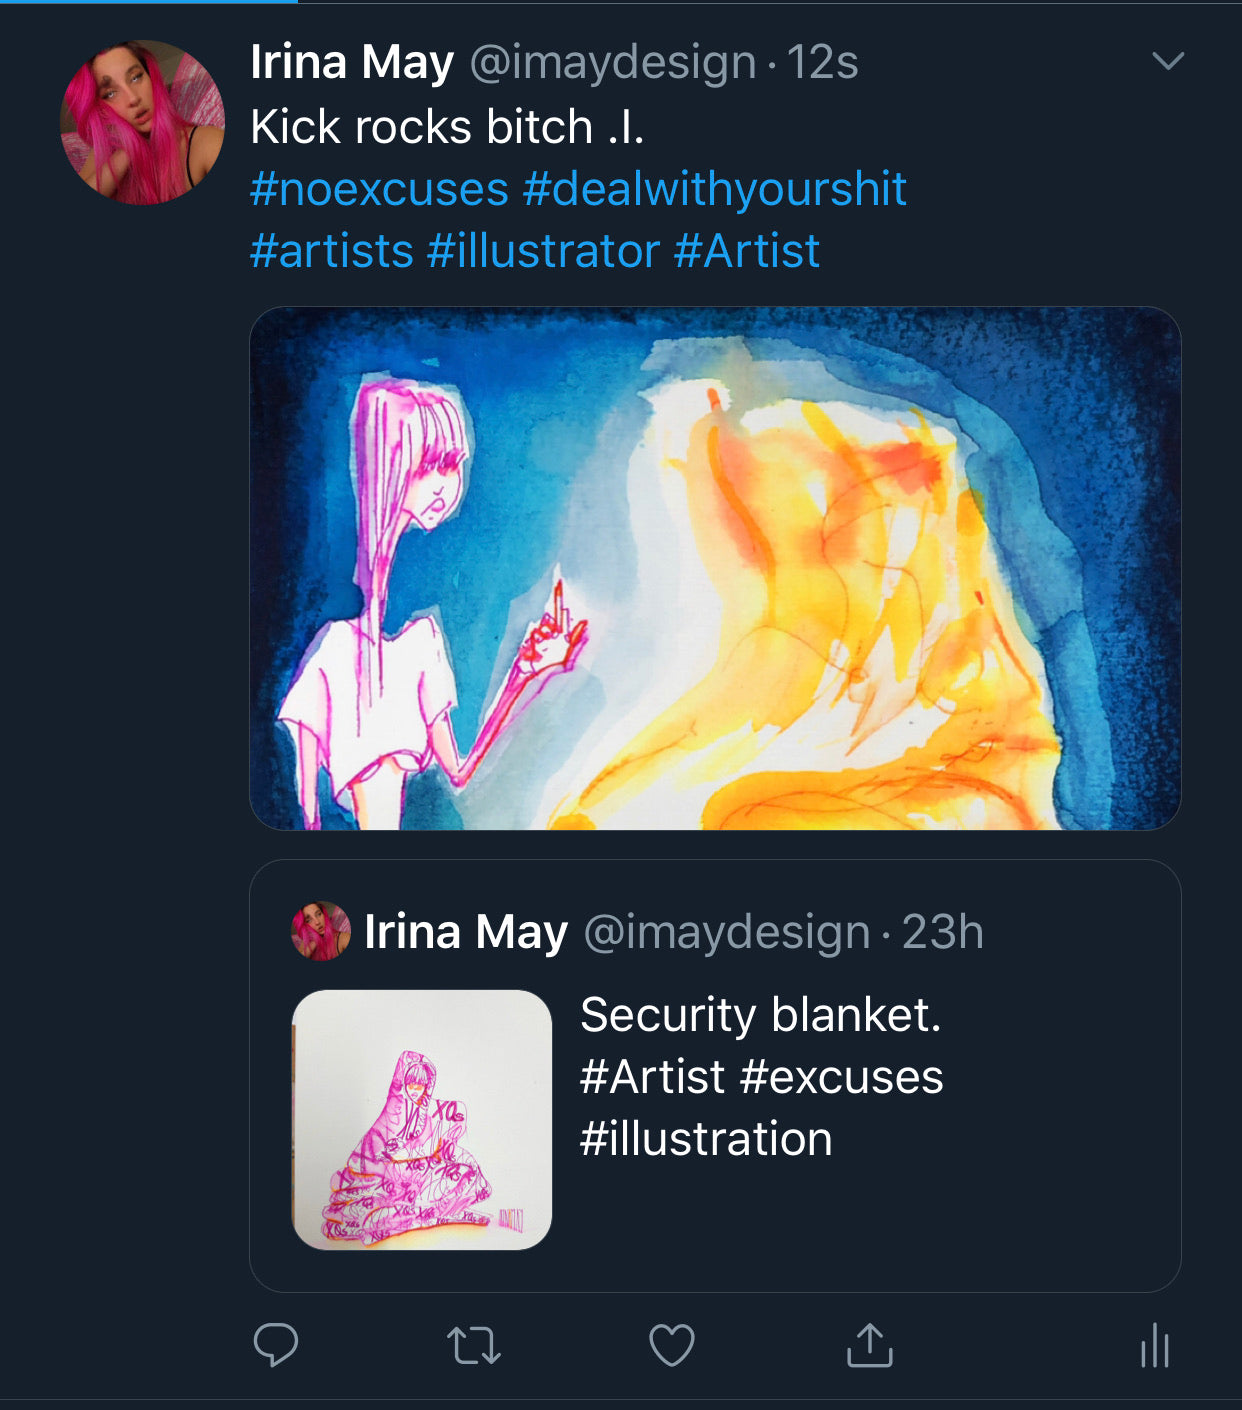 Kick rocks Security blanket - no excuses.